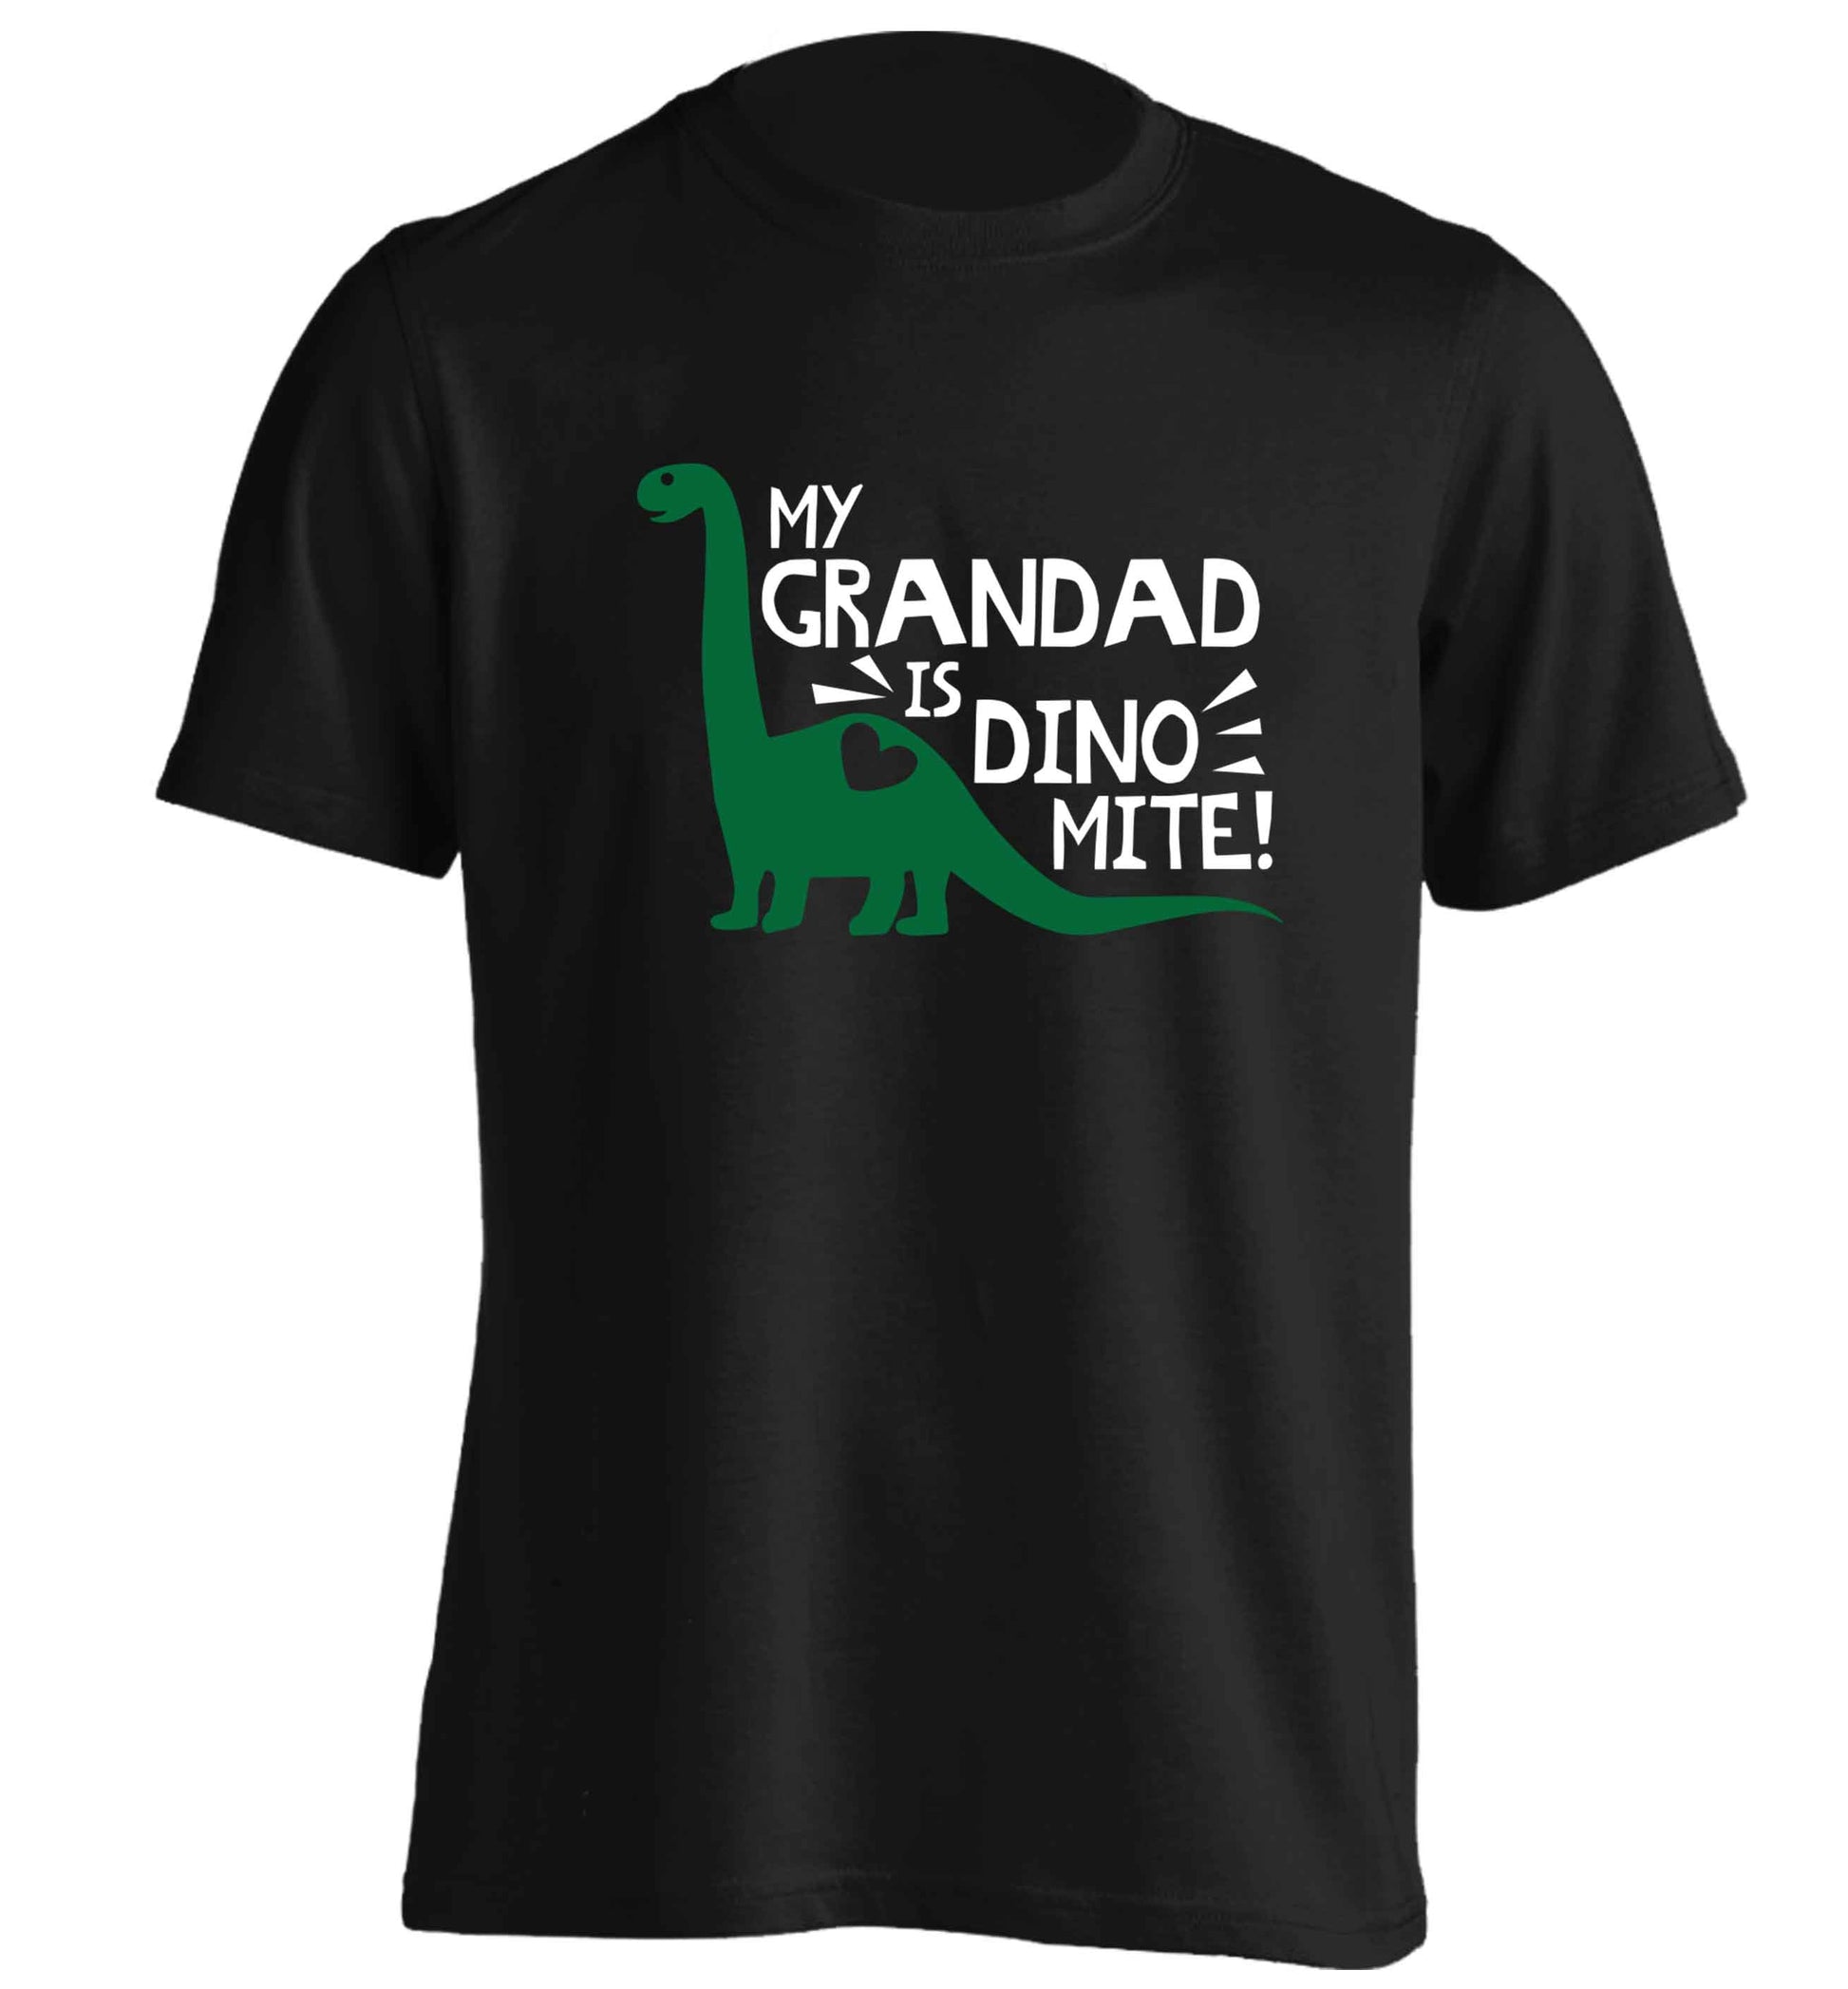 My grandad is dinomite! adults unisex black Tshirt 2XL